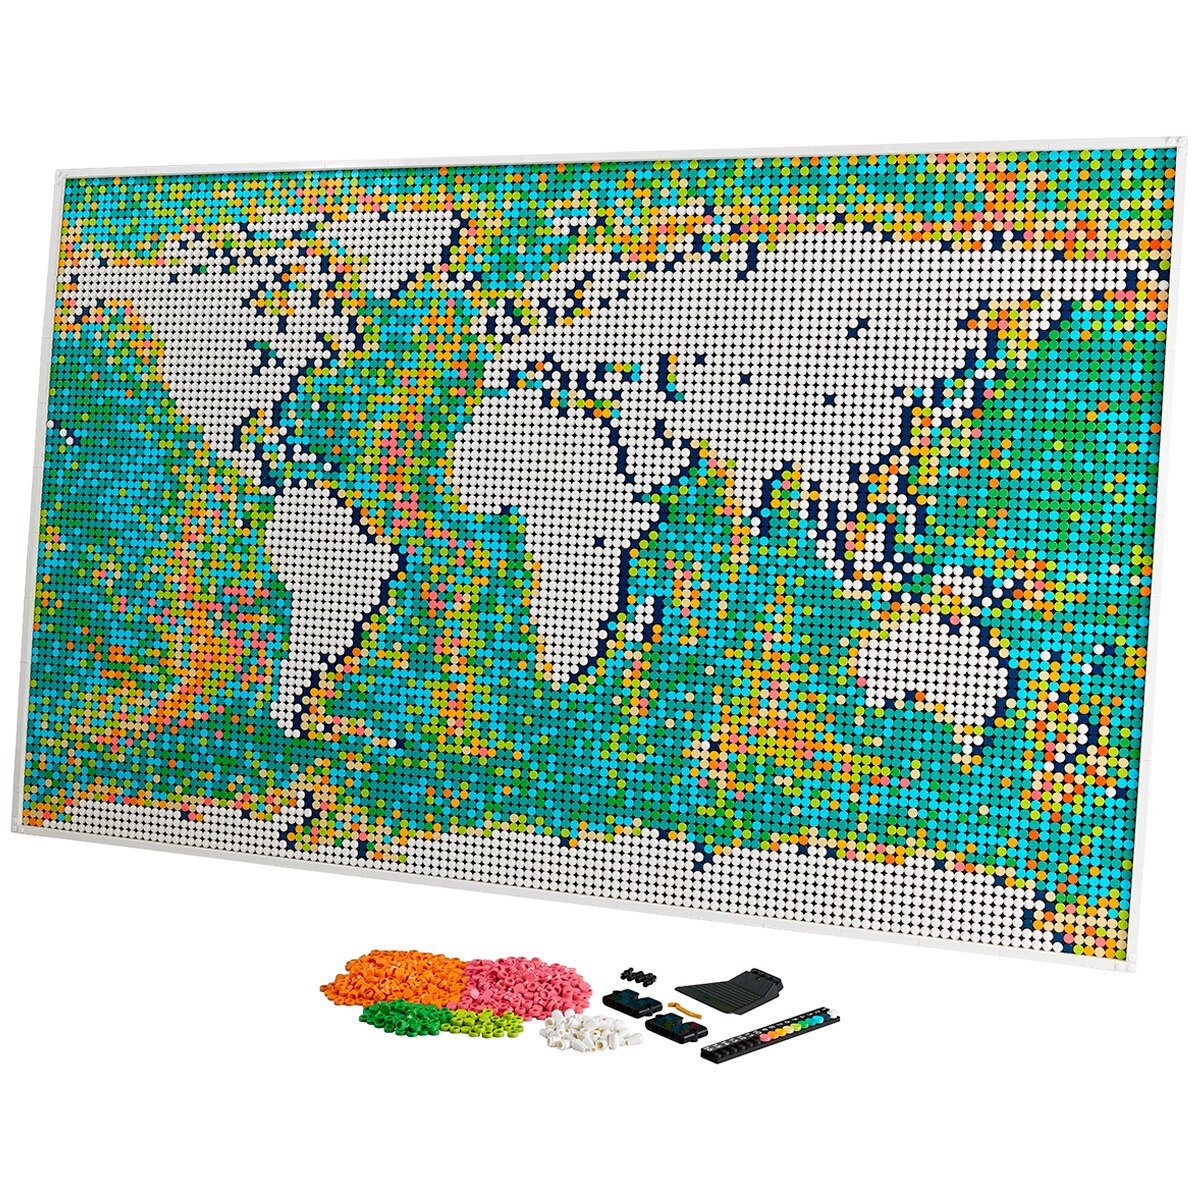 Lego Art World Map 31203